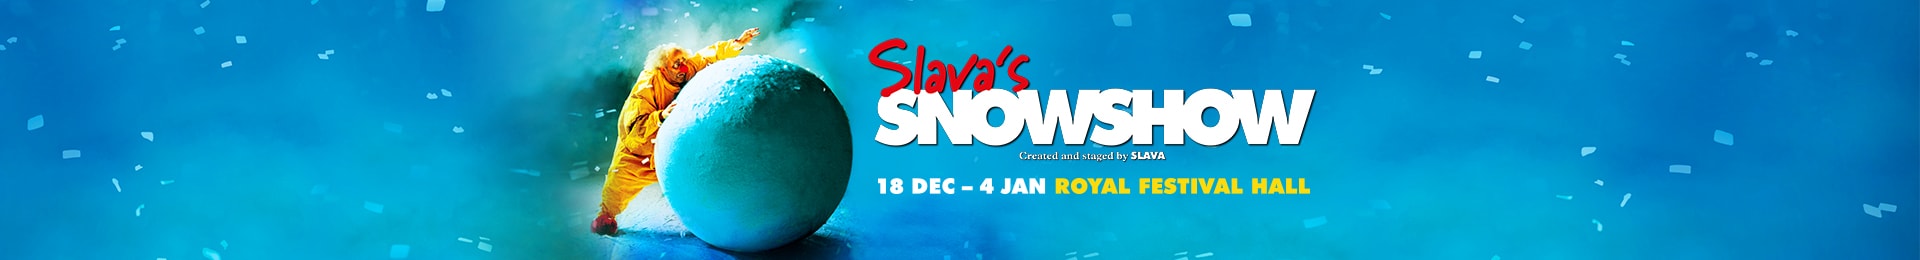 Slava's Snowshow banner image